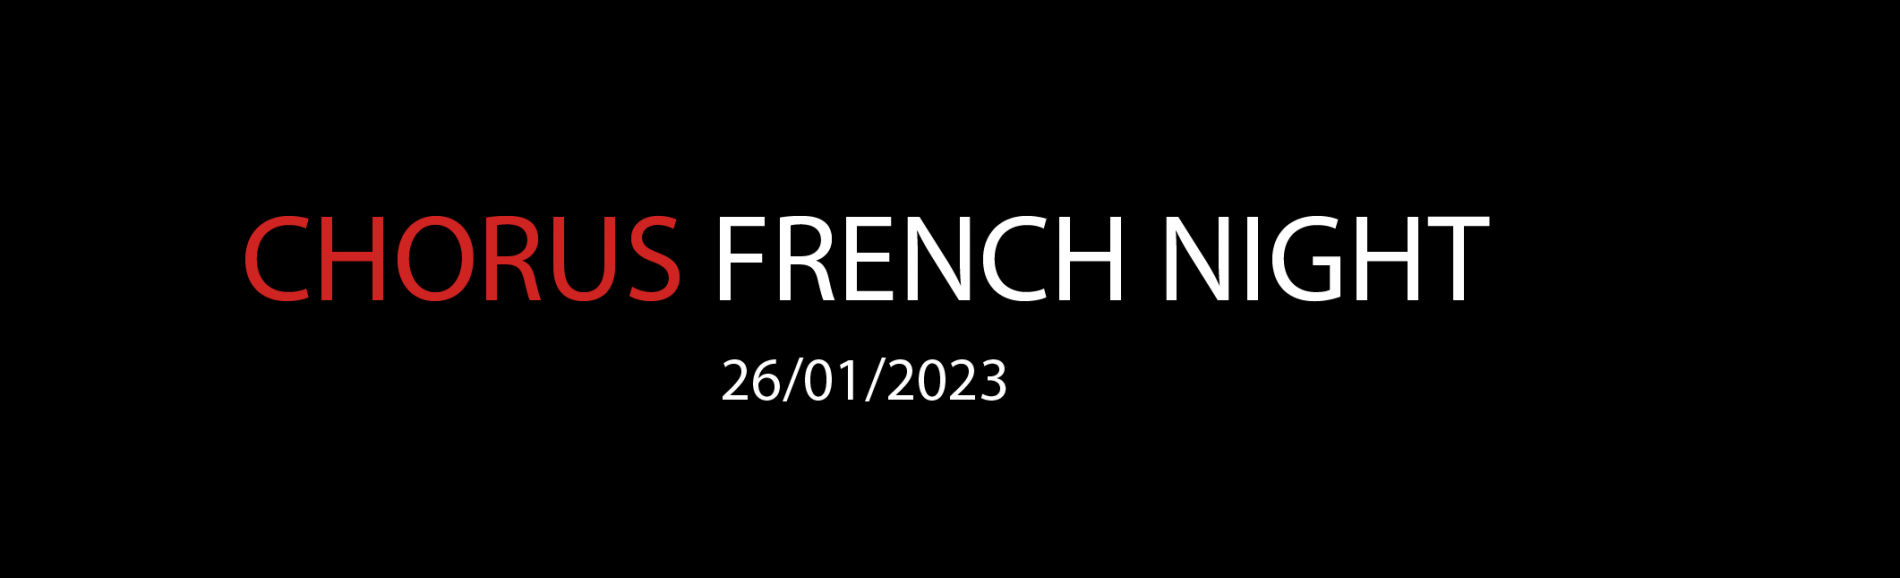 FRENCH NIGHT 26/01/2023